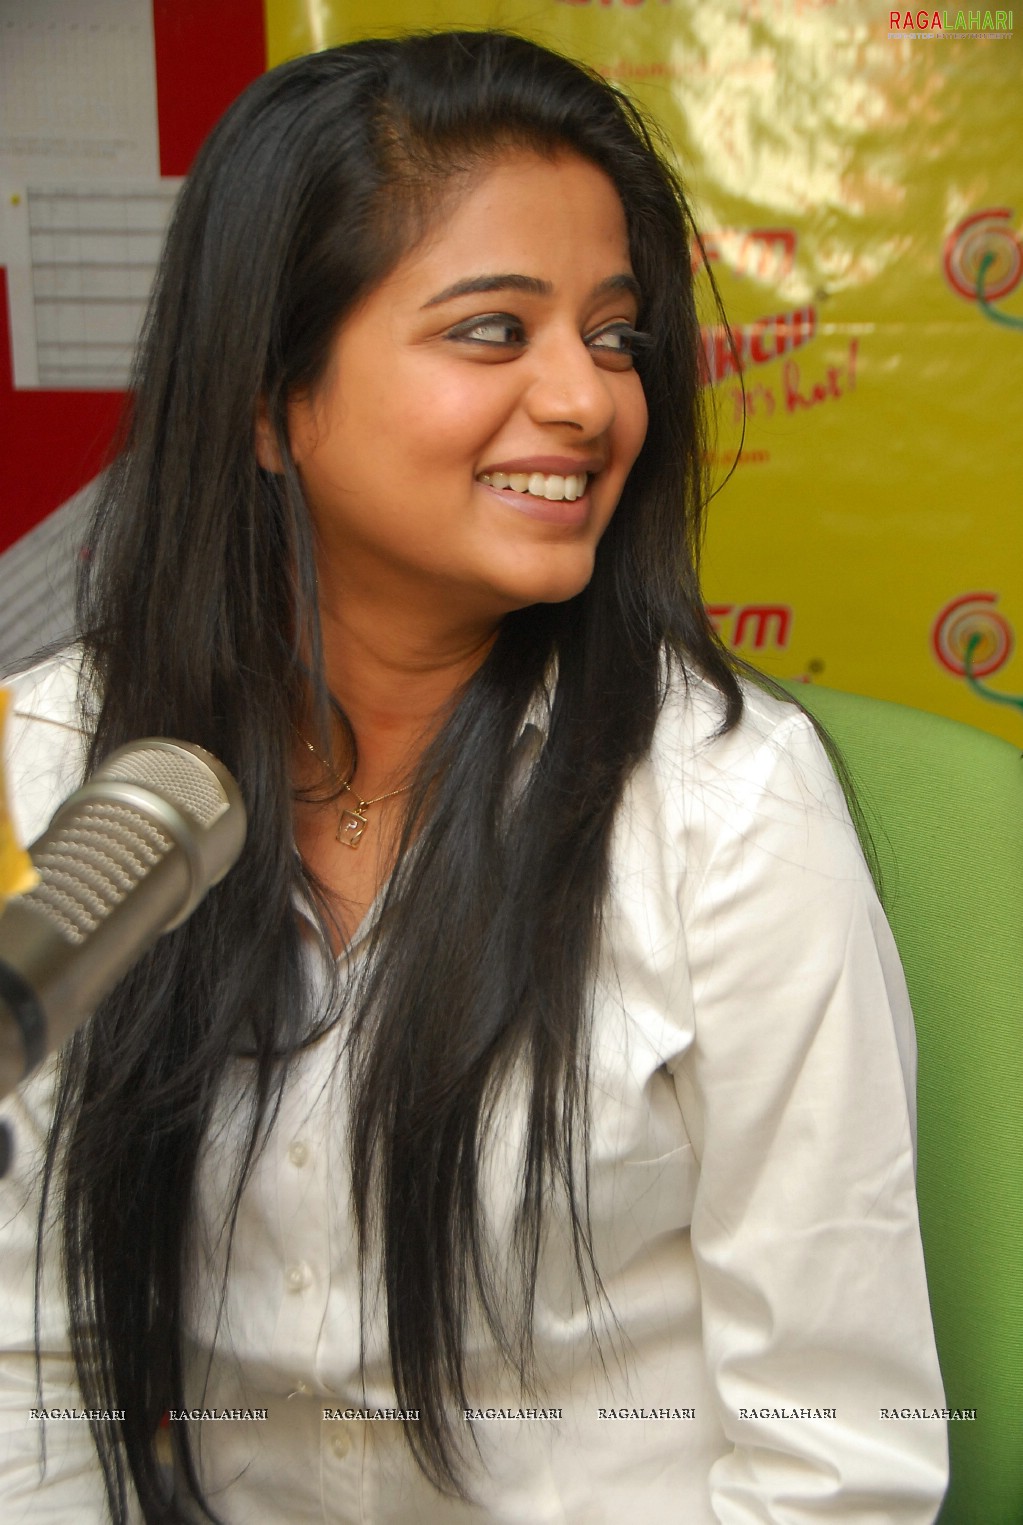 Priyamani at Radio Mirchi 98.3FM for Raaj Audio Release - Photo Coverage